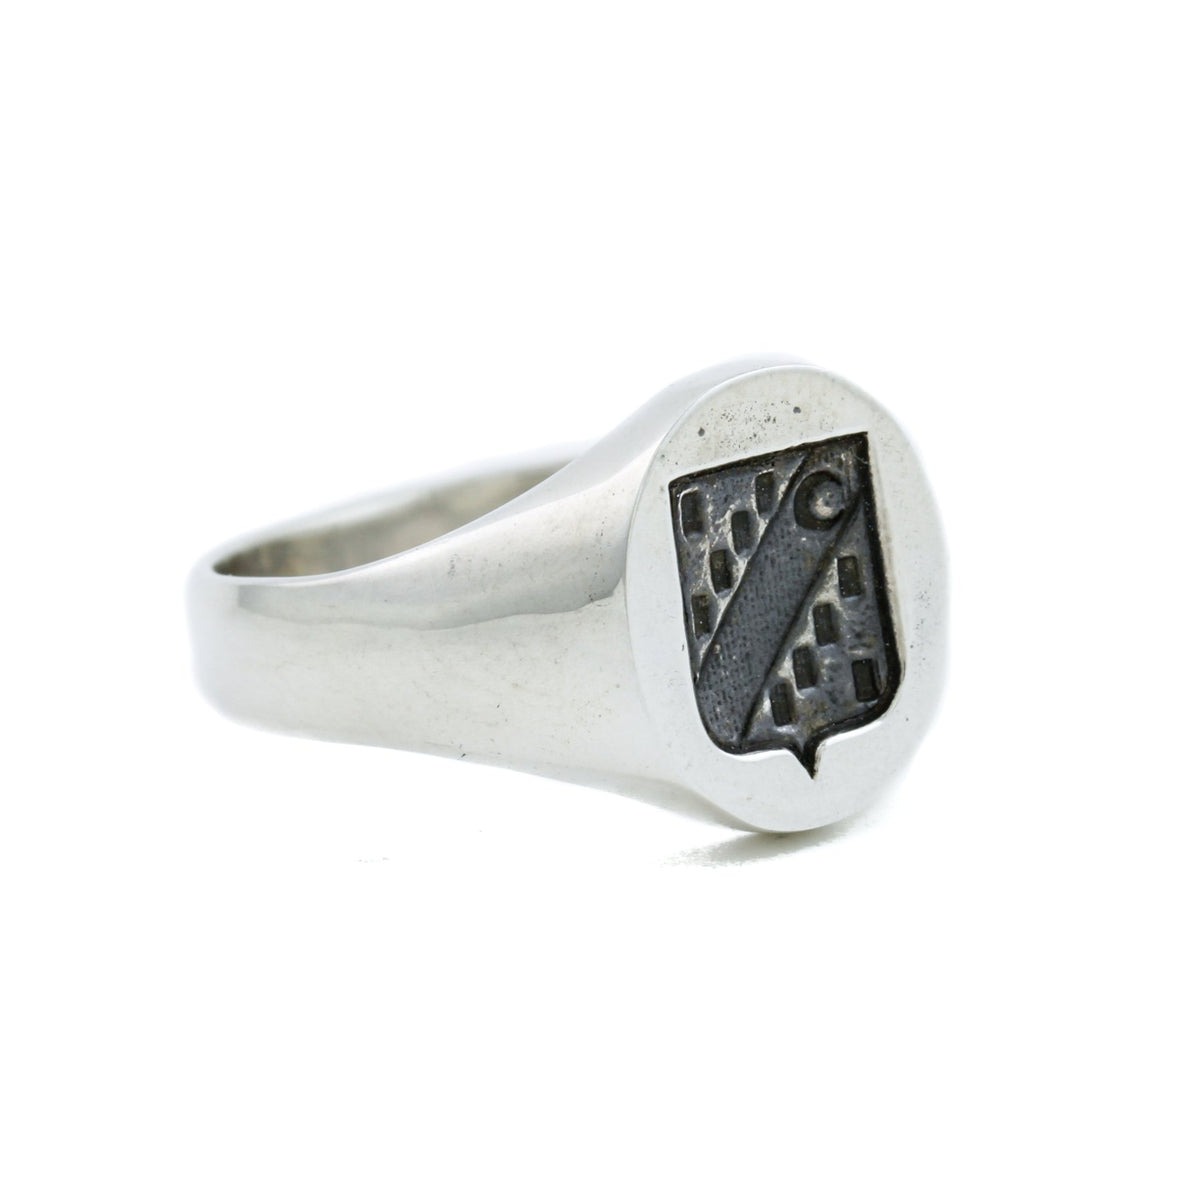 Silver "Moon" Wax Seal Crest Signet Ring - Kingdom Jewelry